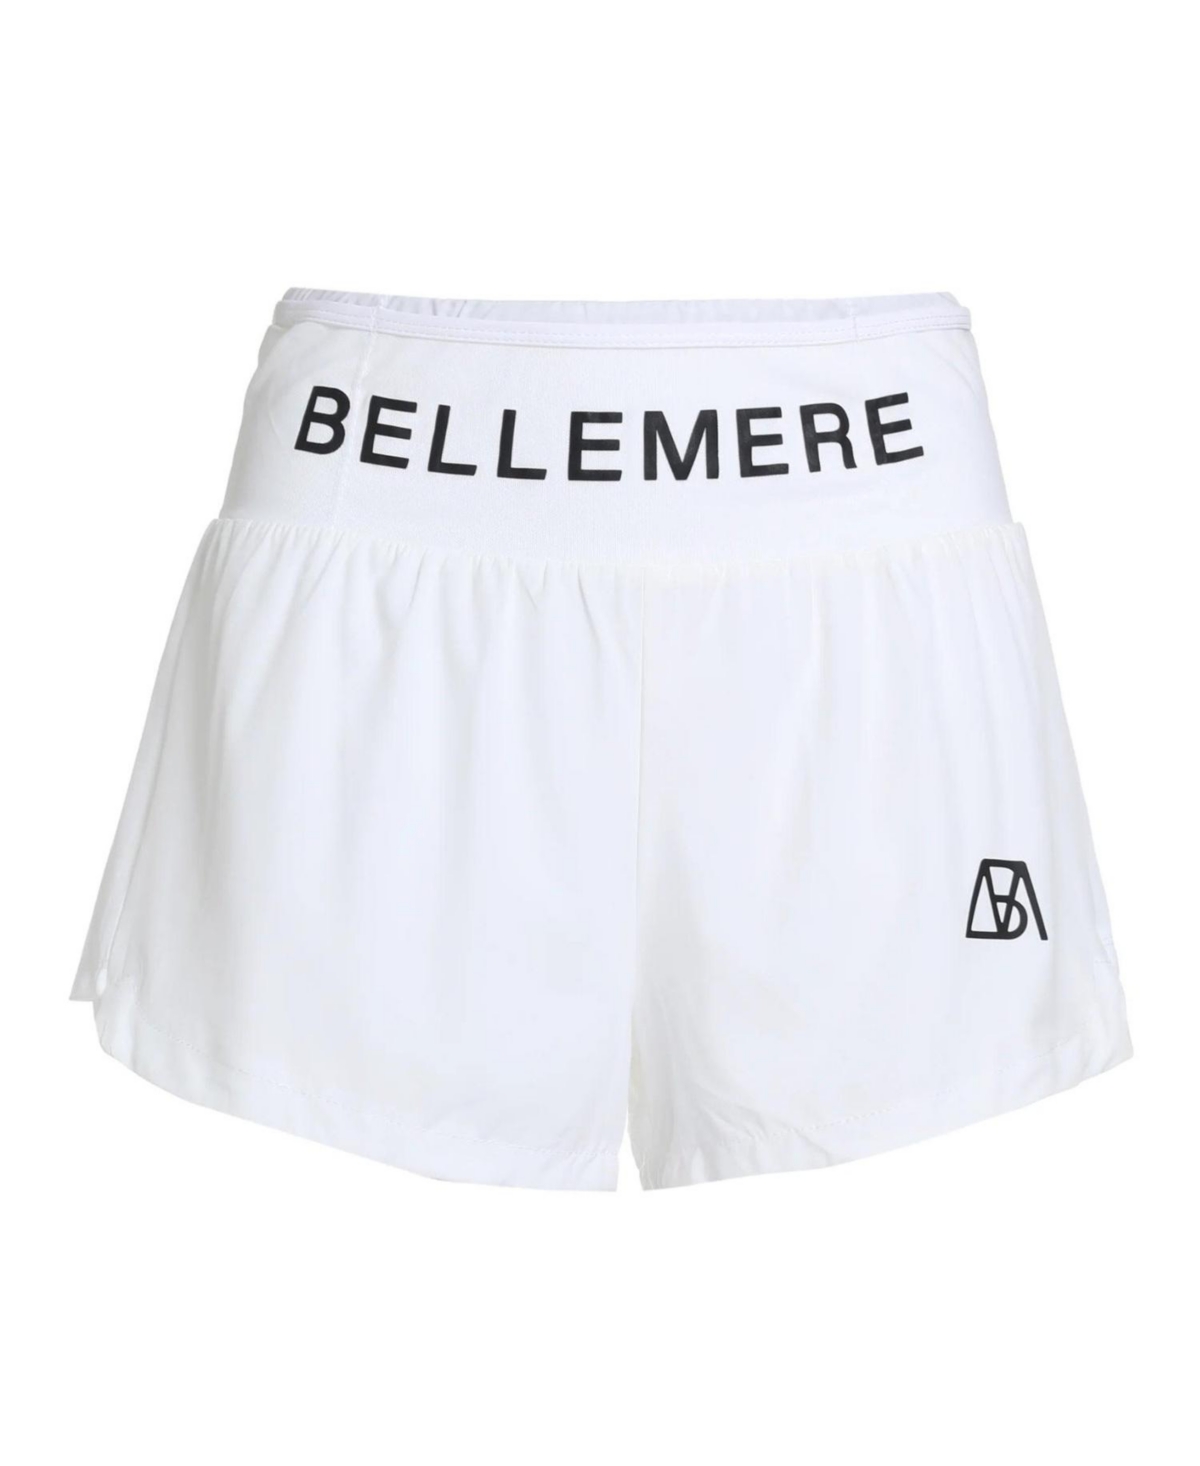 Belle mere Women's Tencel Shorts - Black